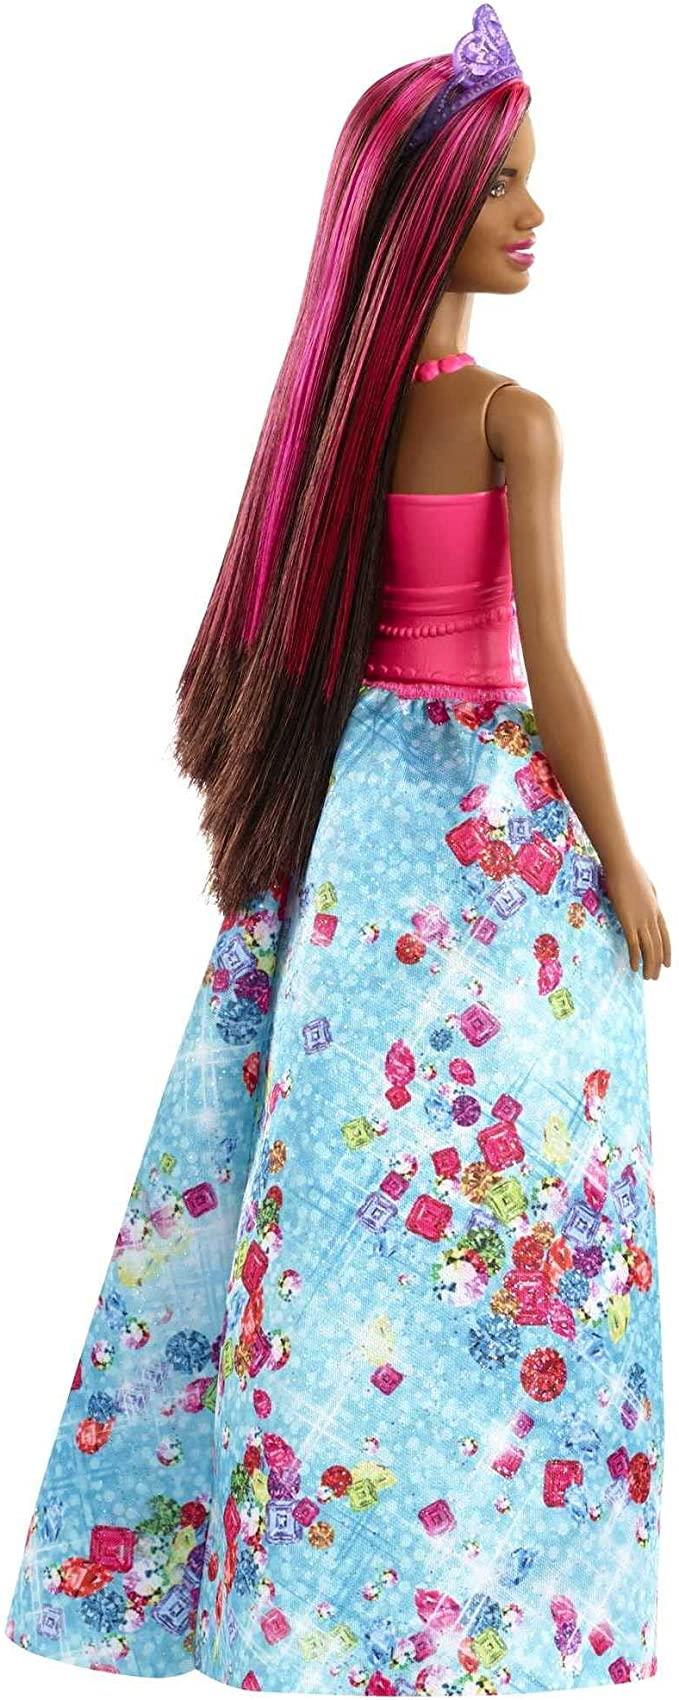 BARBIE Dreamtopia Princess 12" Doll Brunette with Pink Hairstreak Wearing Blue Skirt and Tiara (GJK15)